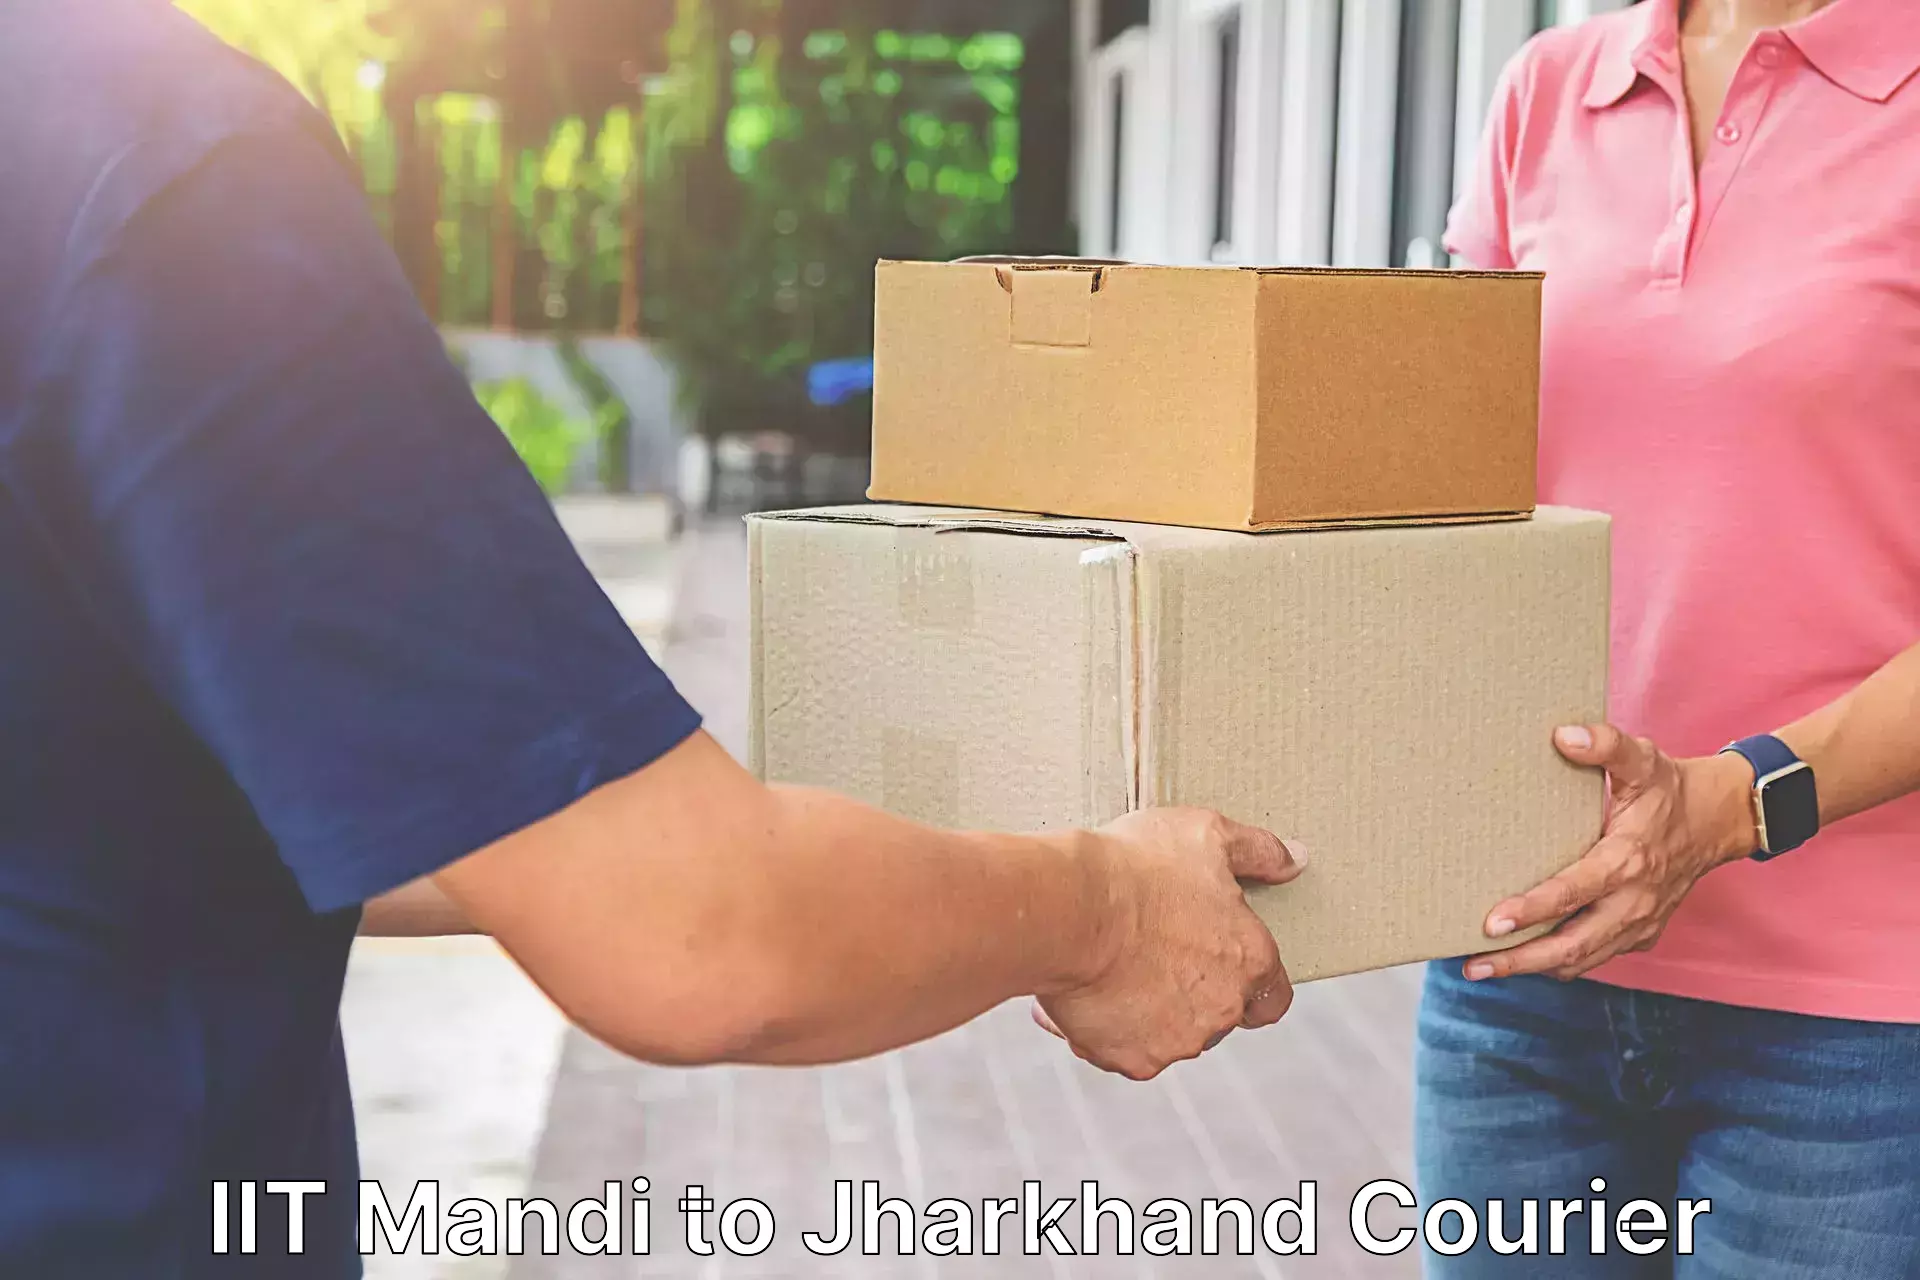 User-friendly delivery service IIT Mandi to Nagar Untari